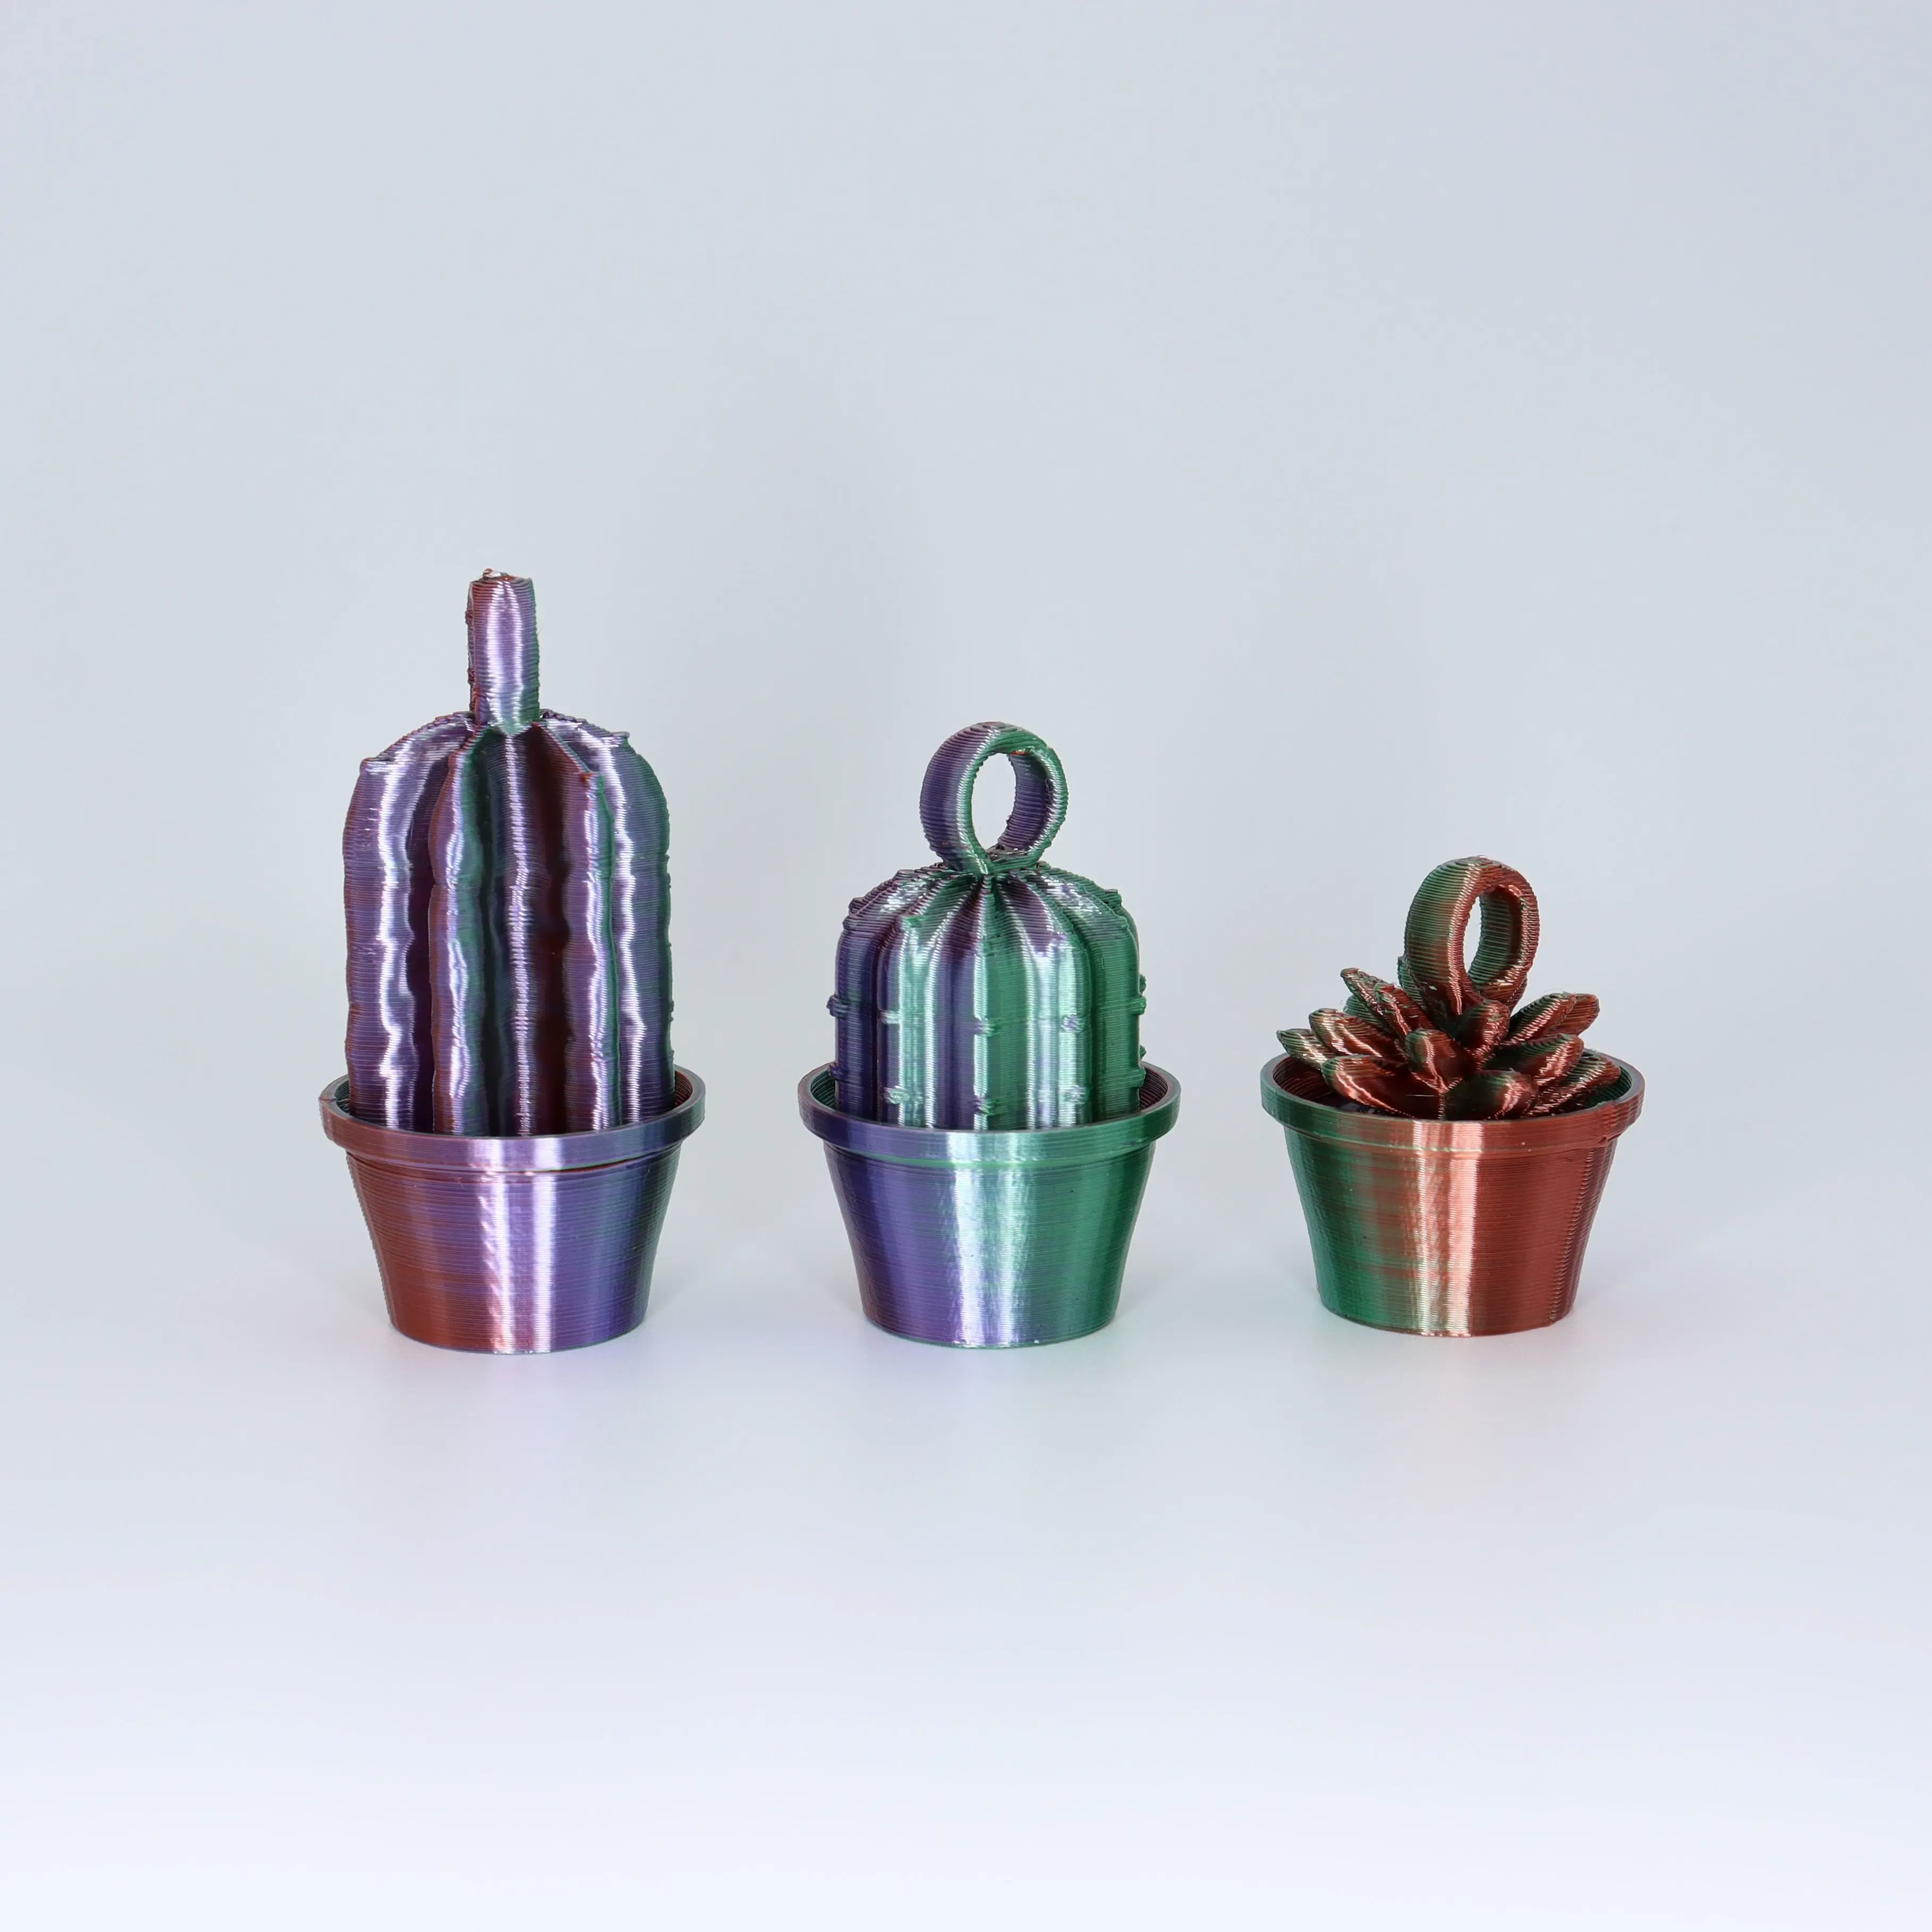 Cactus keychains